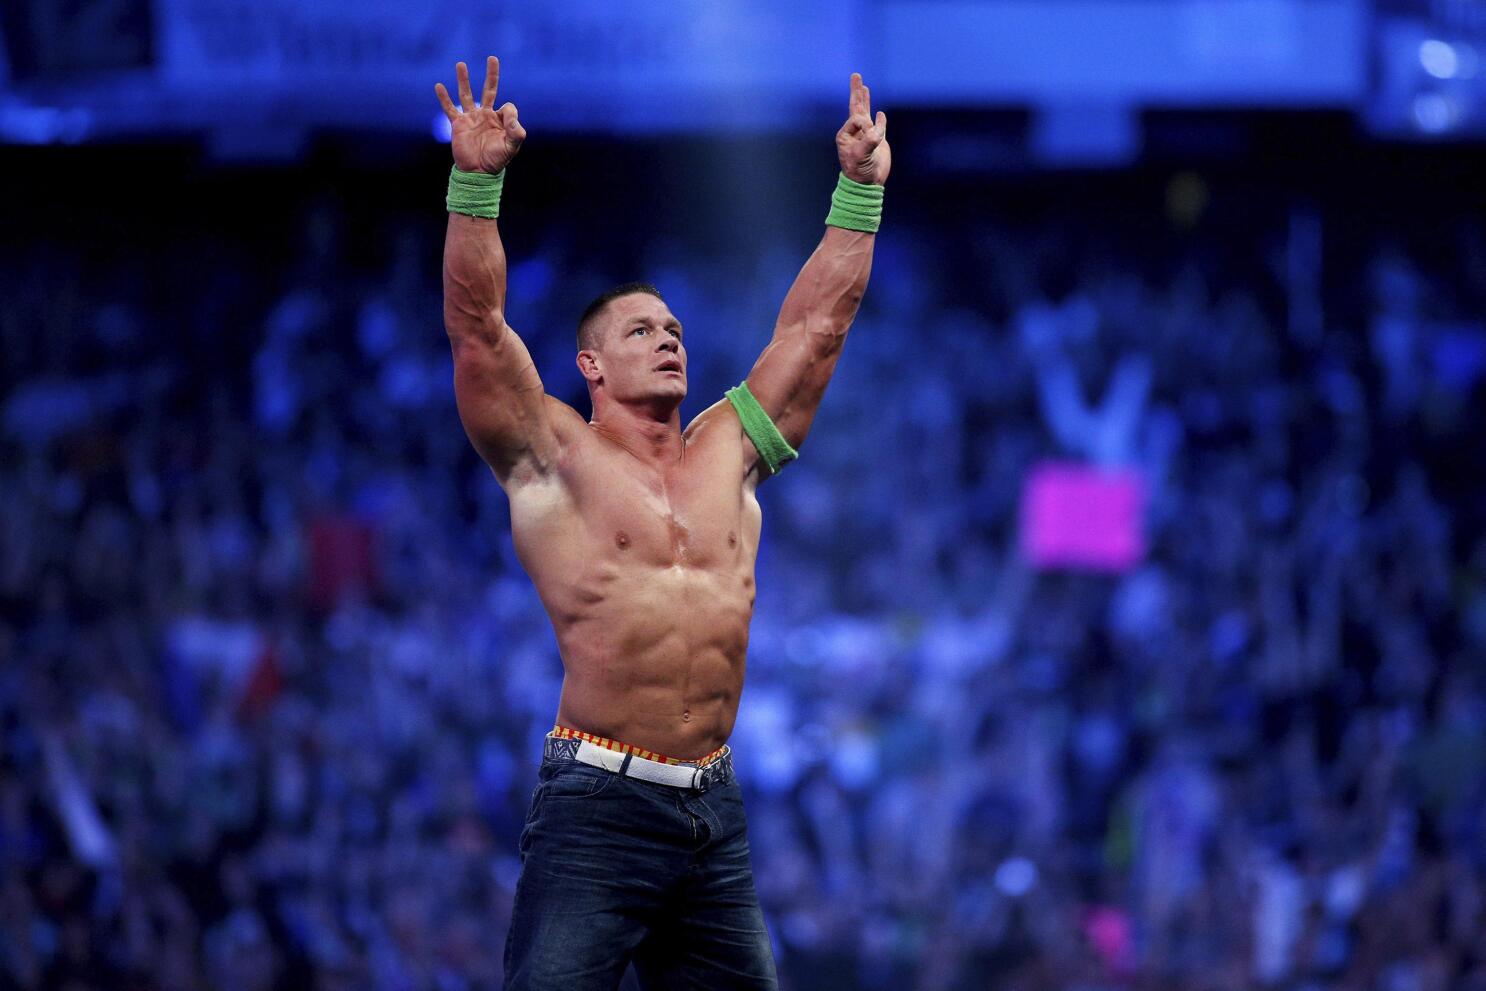 Ww John Cena Sex Videos - Q&A: Actor John Cena makes time for wrestling, Hollywood | AP News